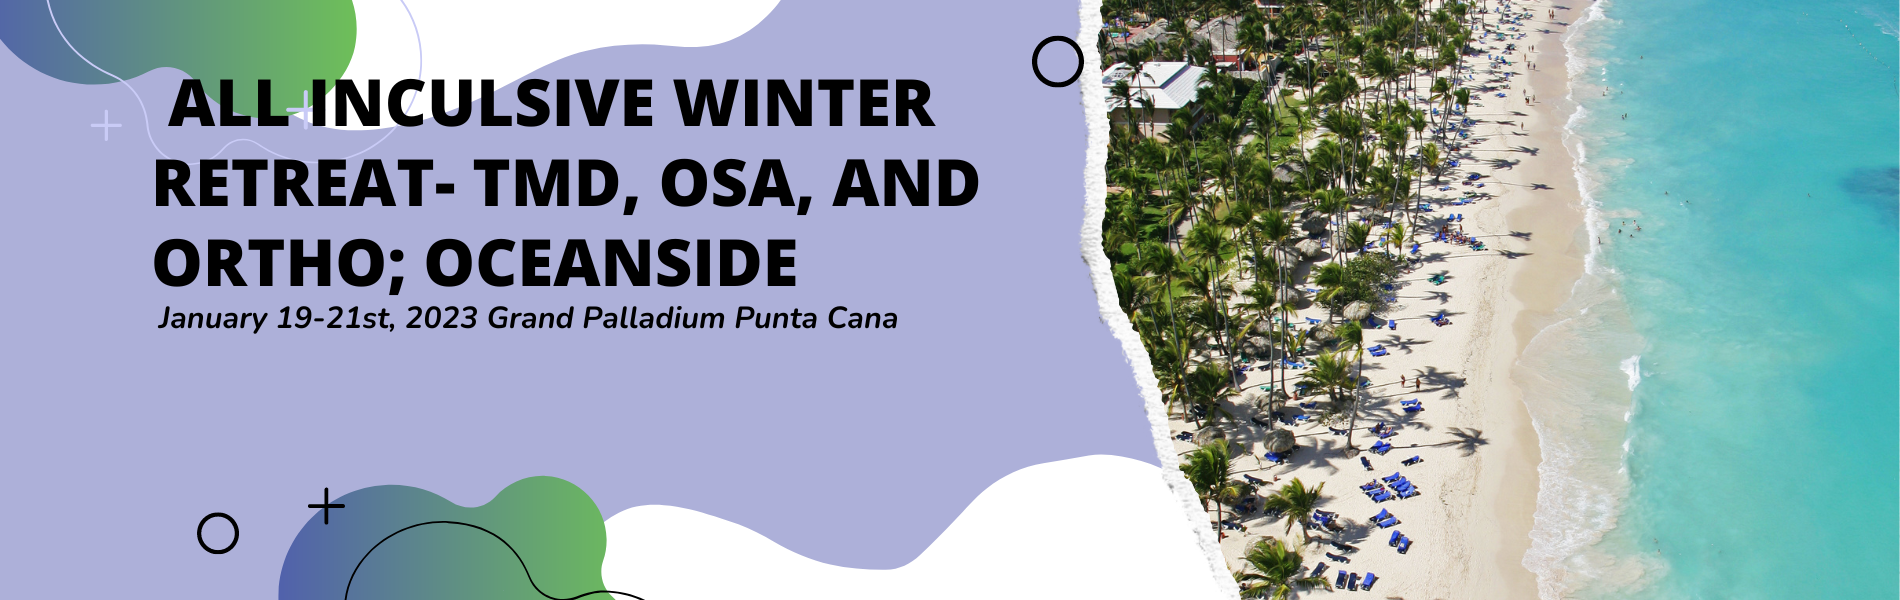 All Inclusive Winter Retreat Punta Cana BioMetrics by the Beach